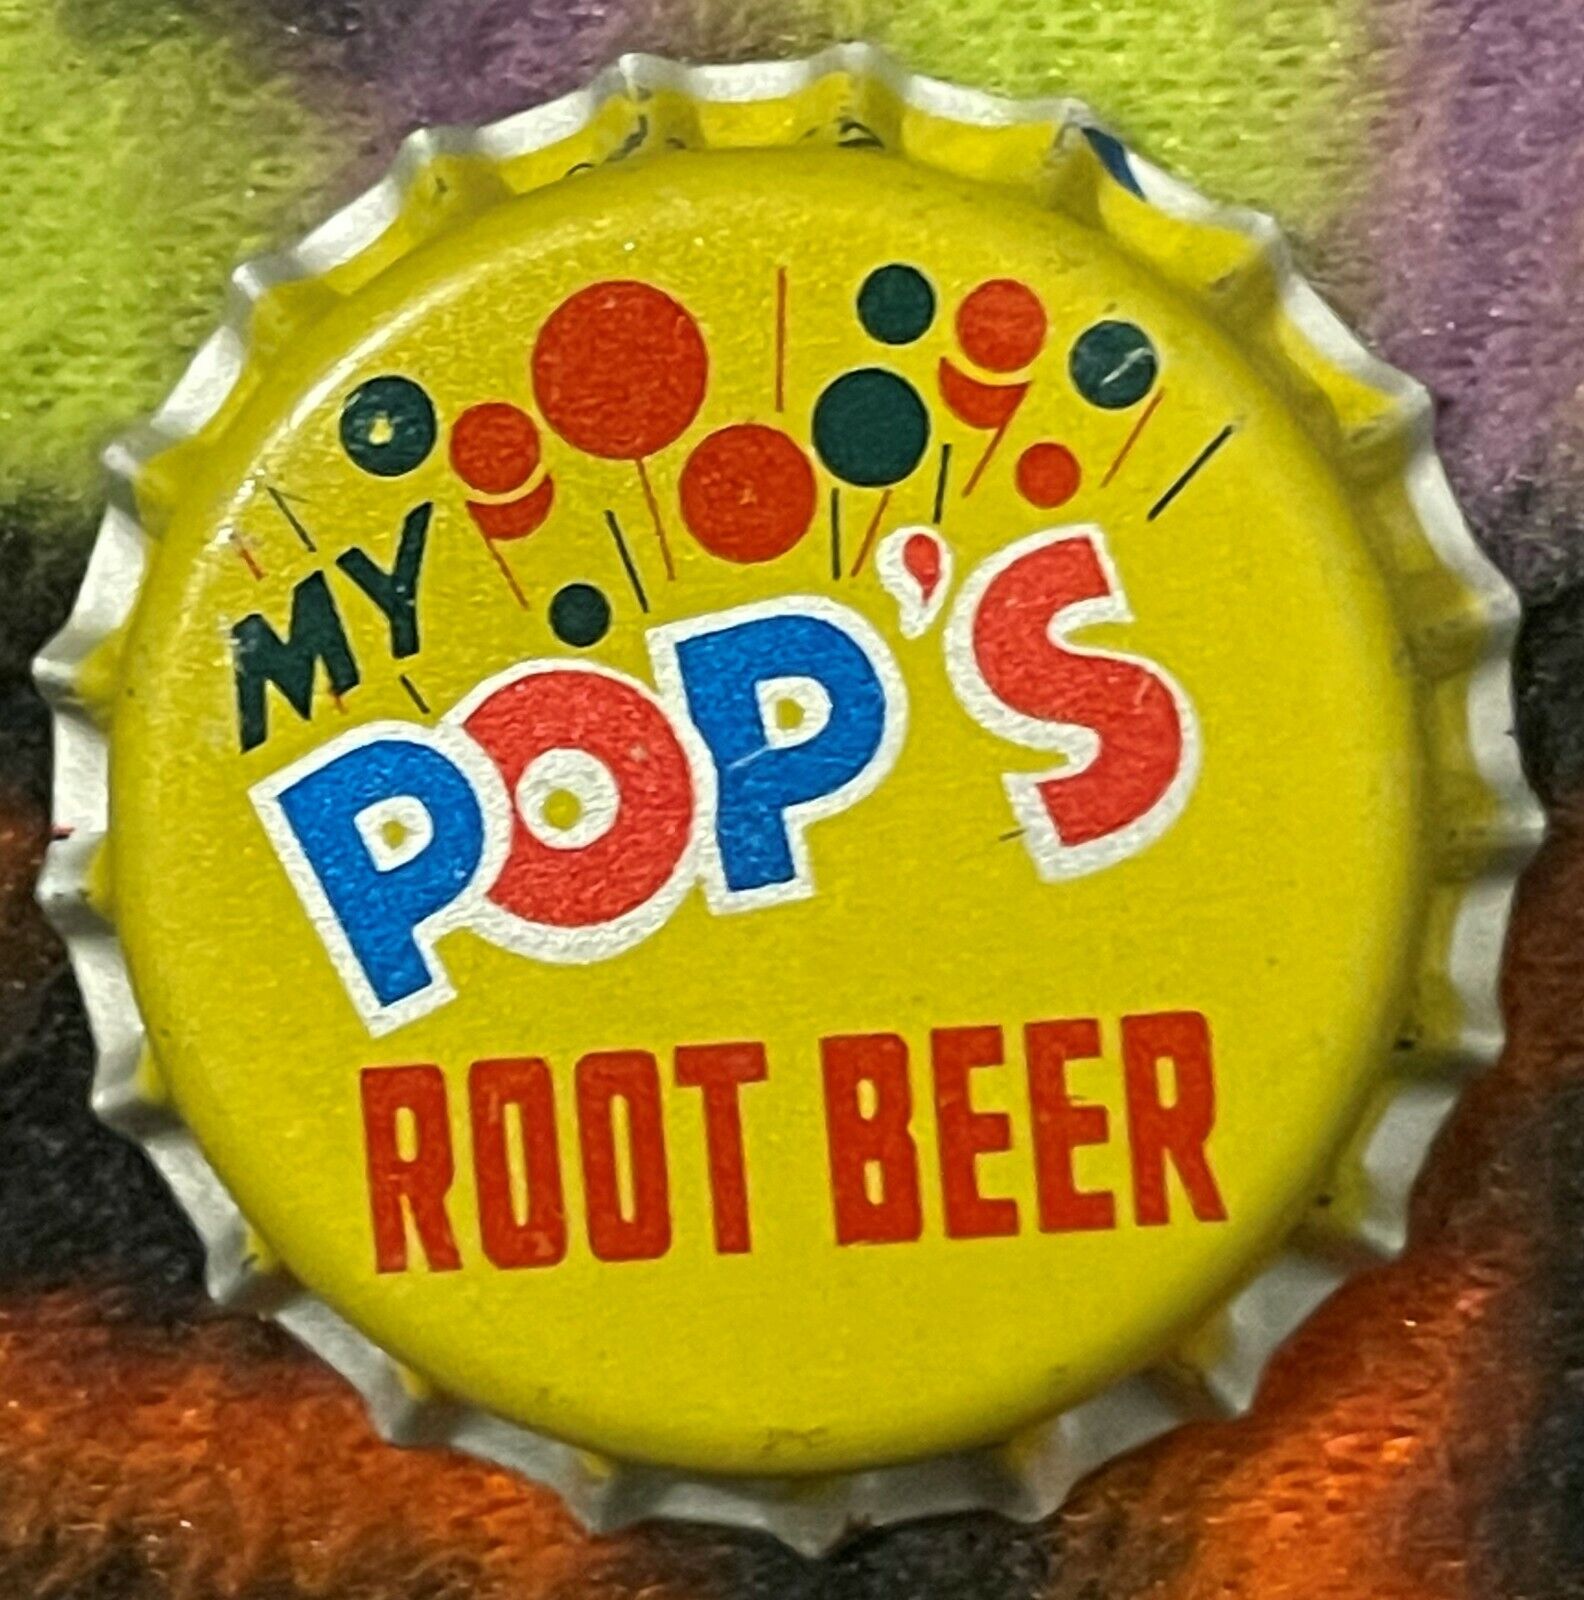 Vintage 1960s My Pop's Root Beer Bottle Cap, Wilkes-Barre, PA Balloons Fireworks